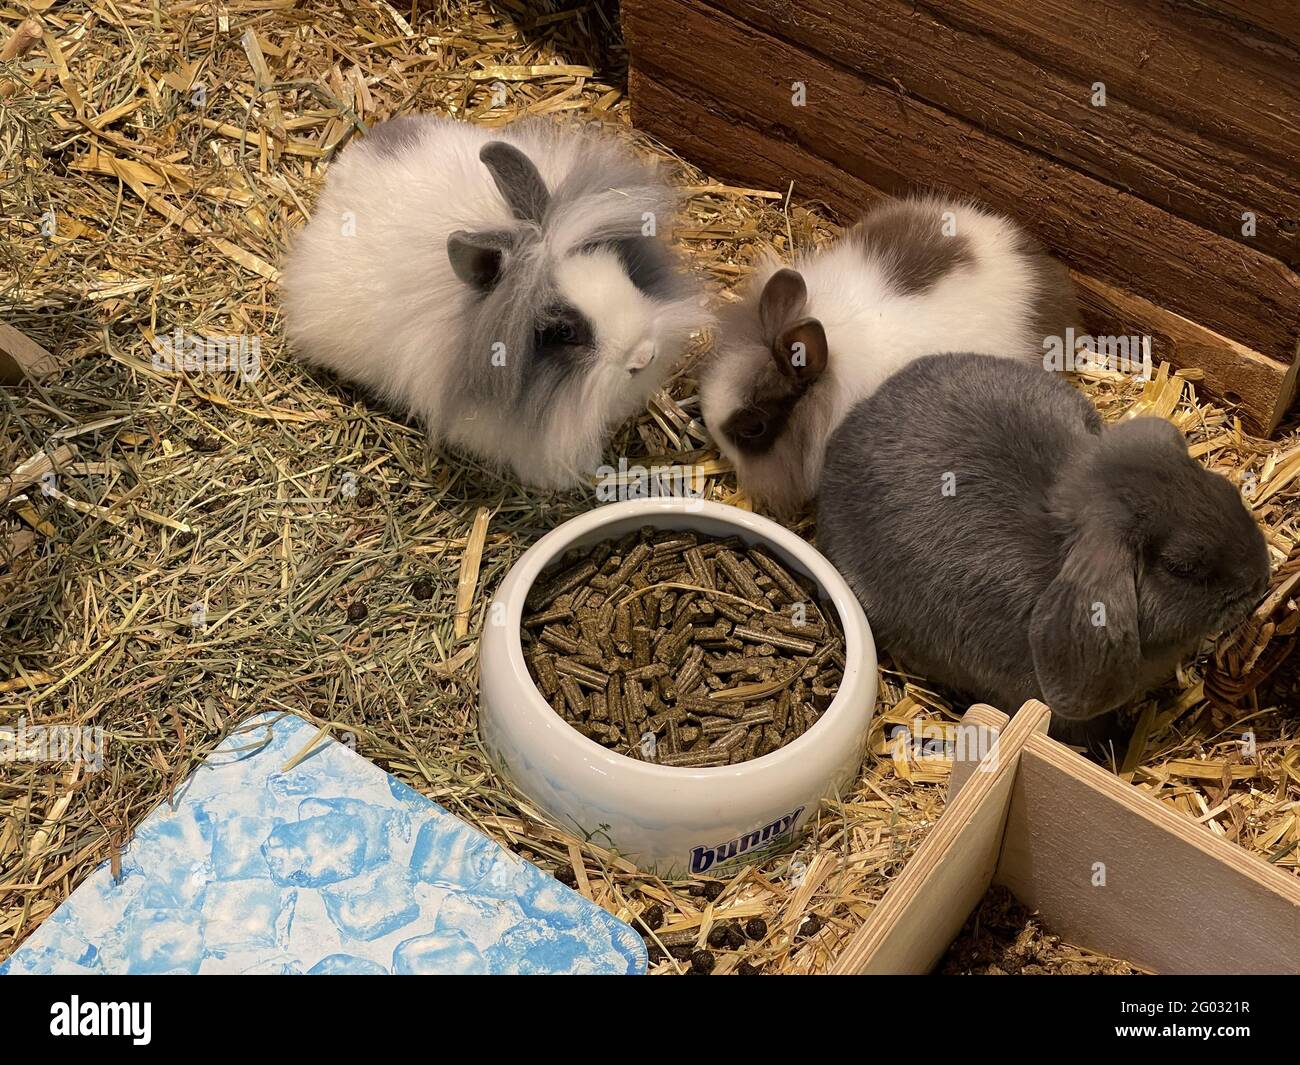 Cute baby bunnies eating food Stock Photo